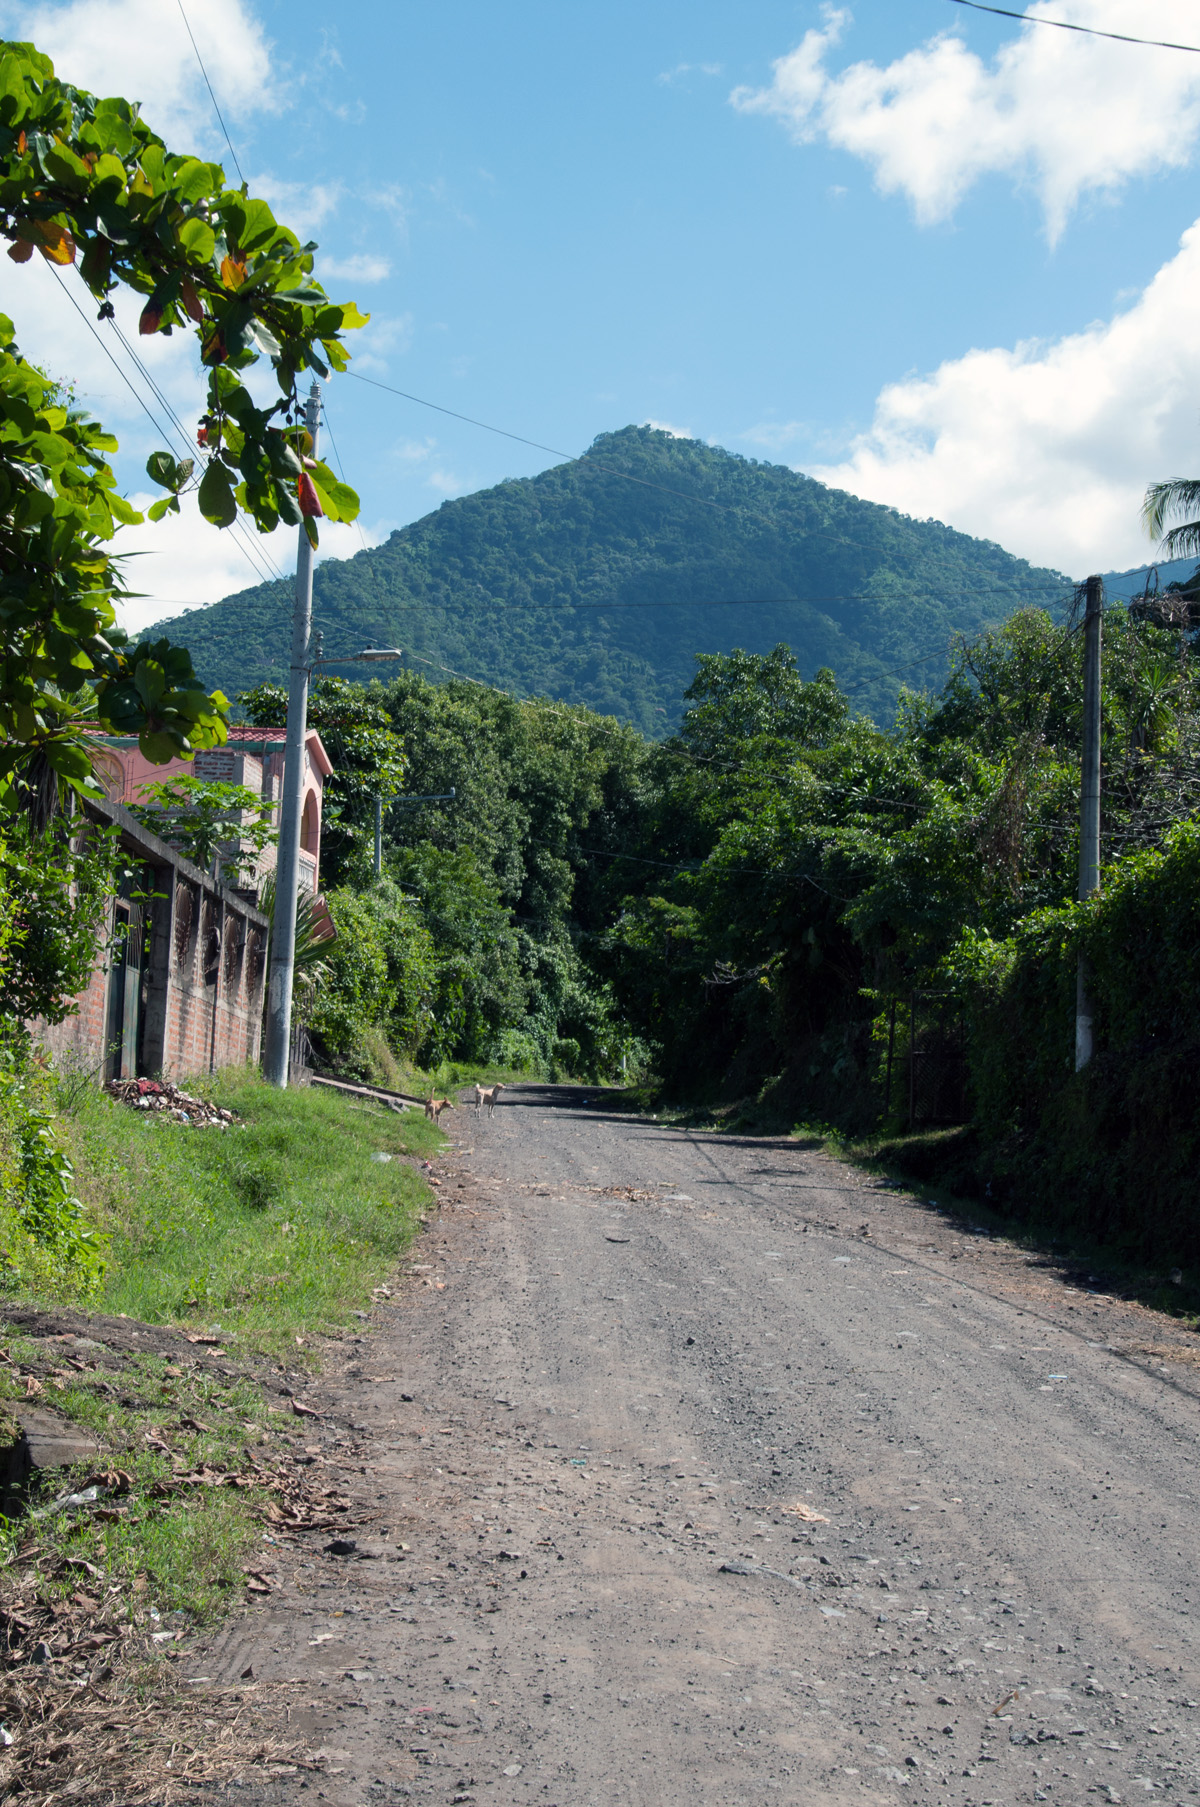 Unpaved roads of the Salvadorian town of Las Delicias.